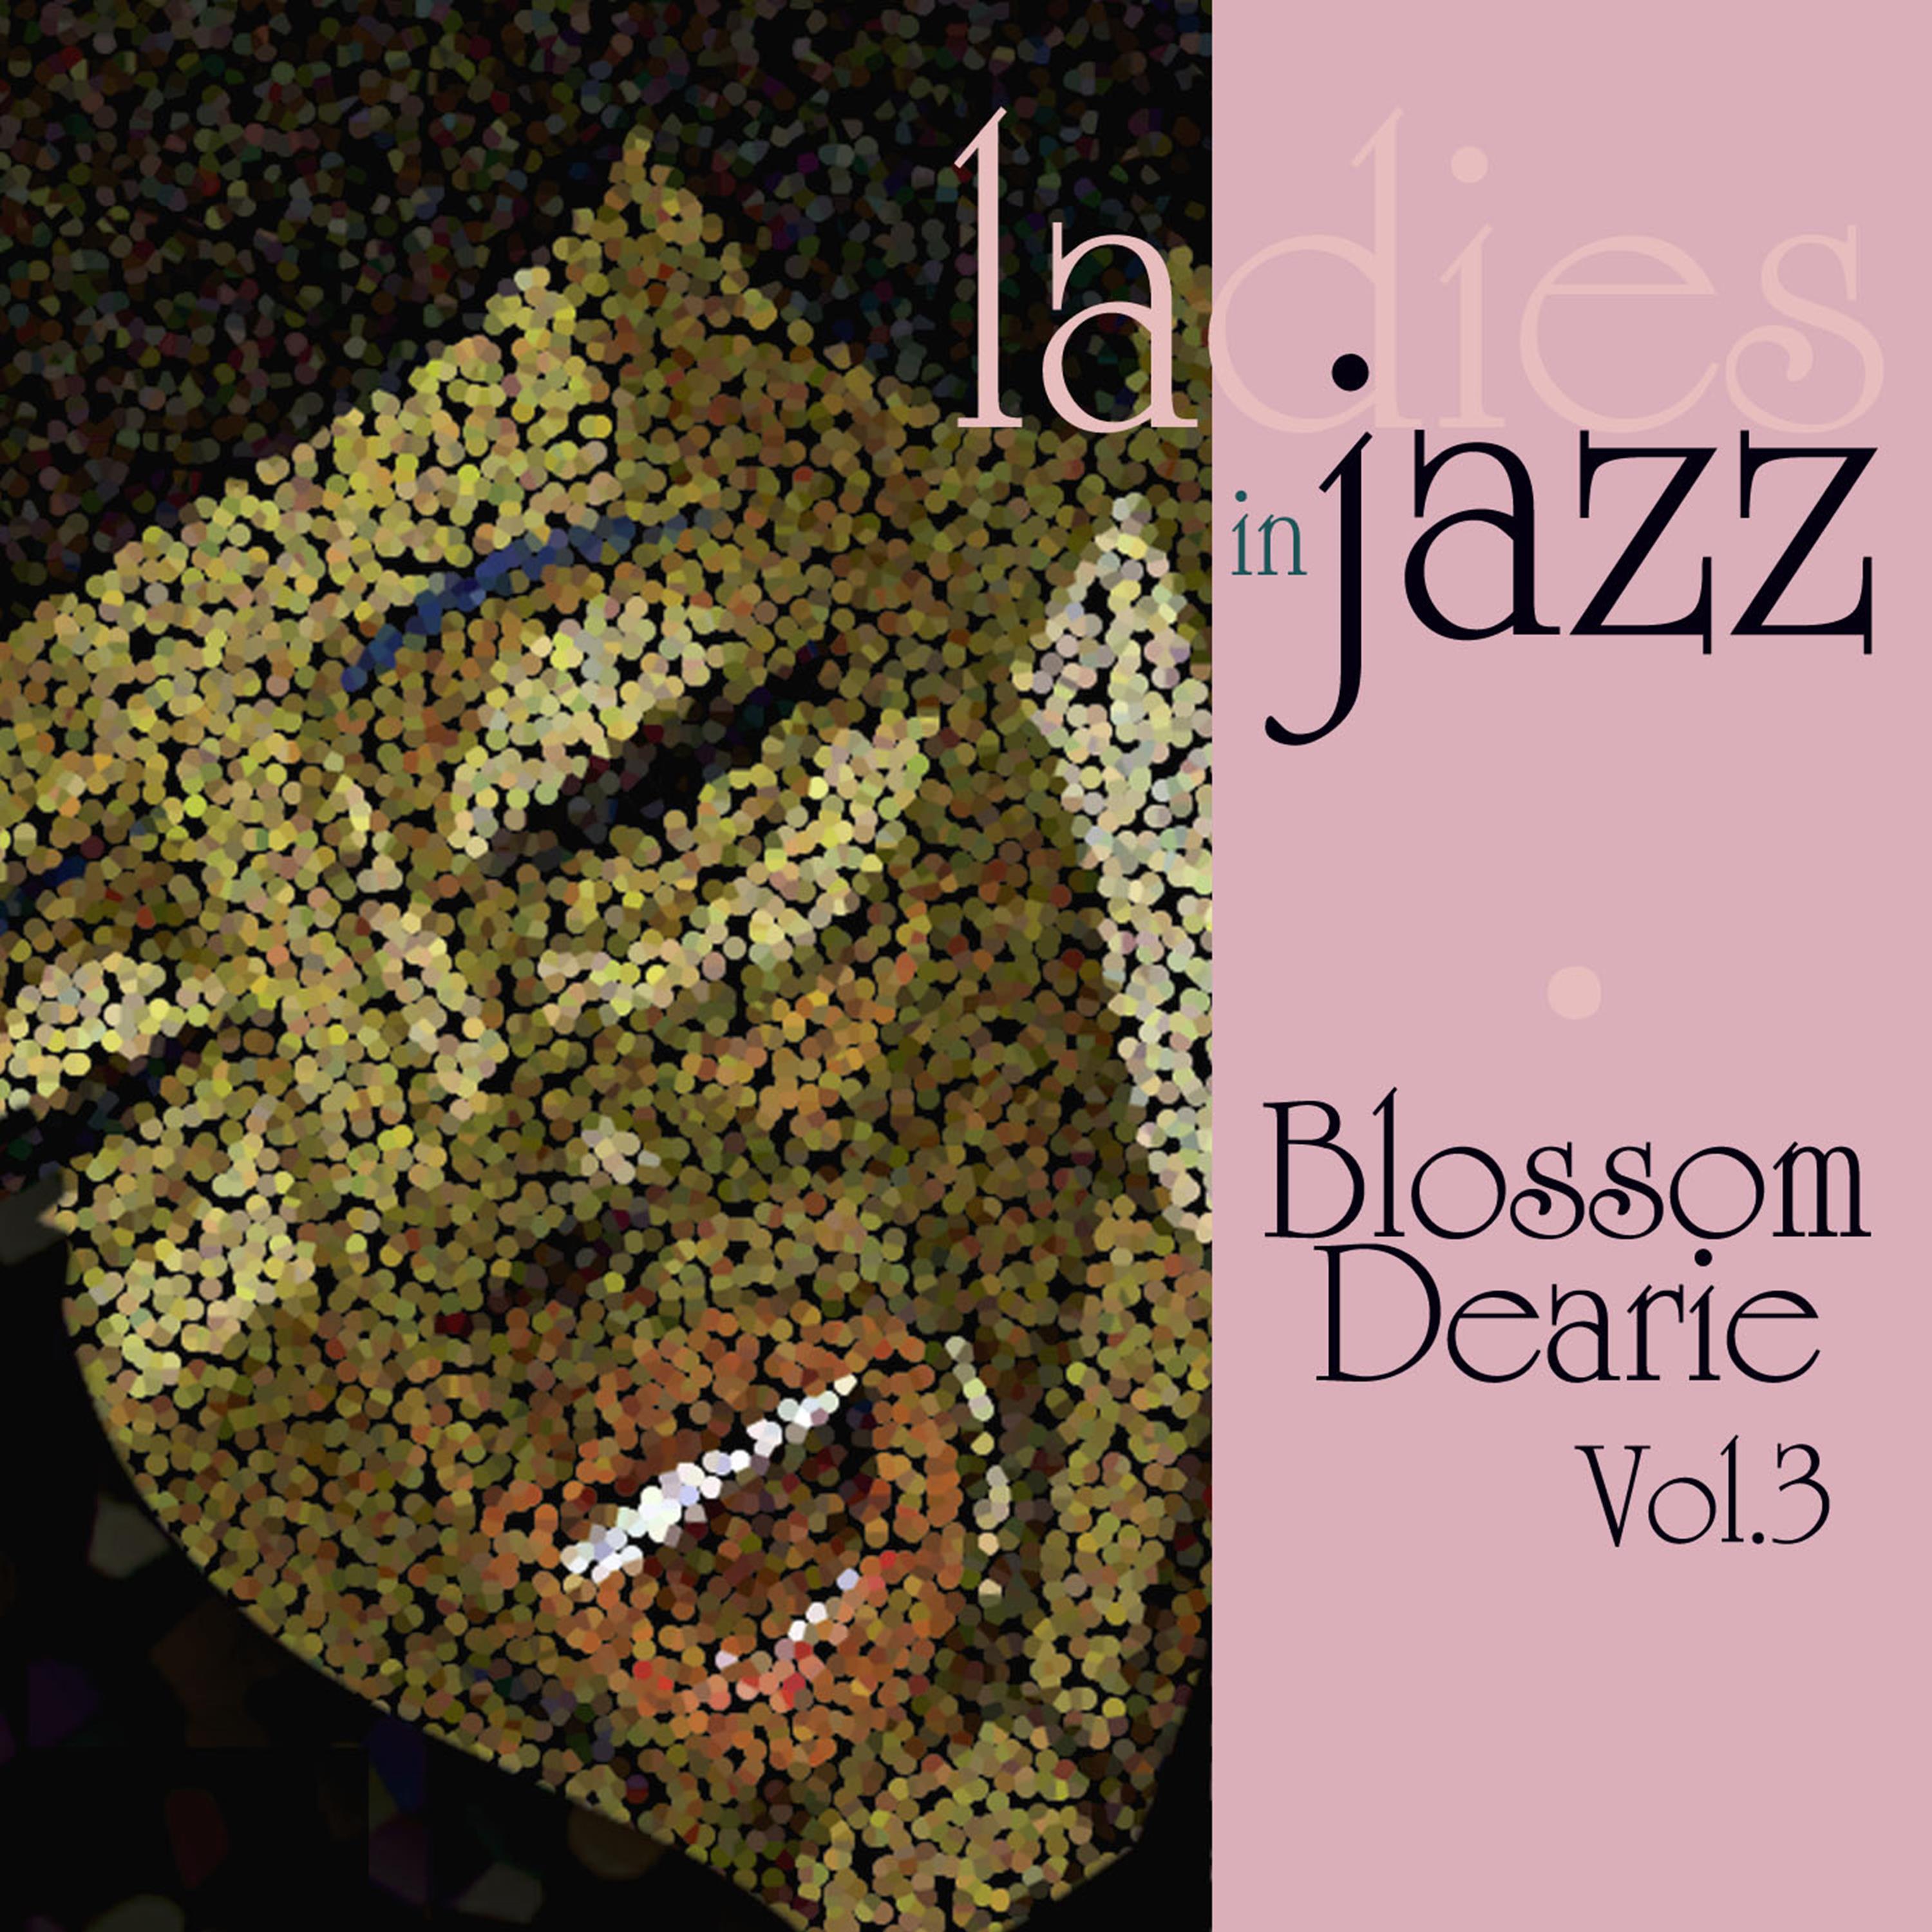 Ladies in Jazz - Blossom Dearie, Vol. 3